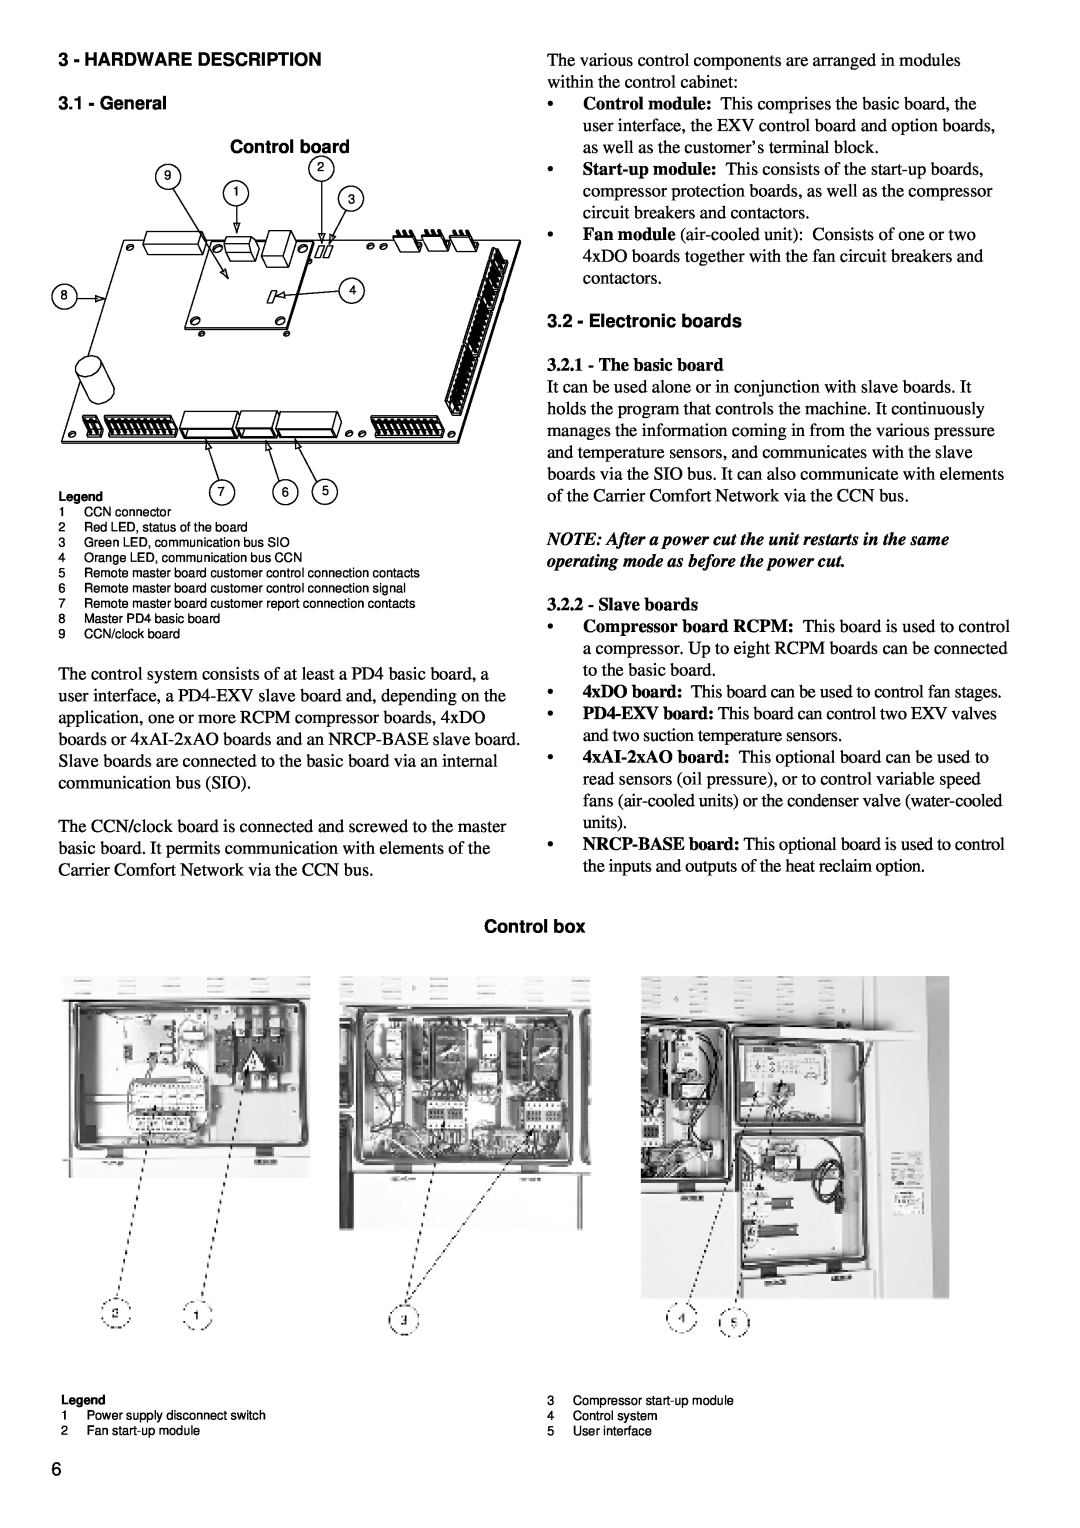 Carrier 30GK manual HARDWARE DESCRIPTION 3.1 - General Control board, Electronic boards, The basic board, Slave boards 